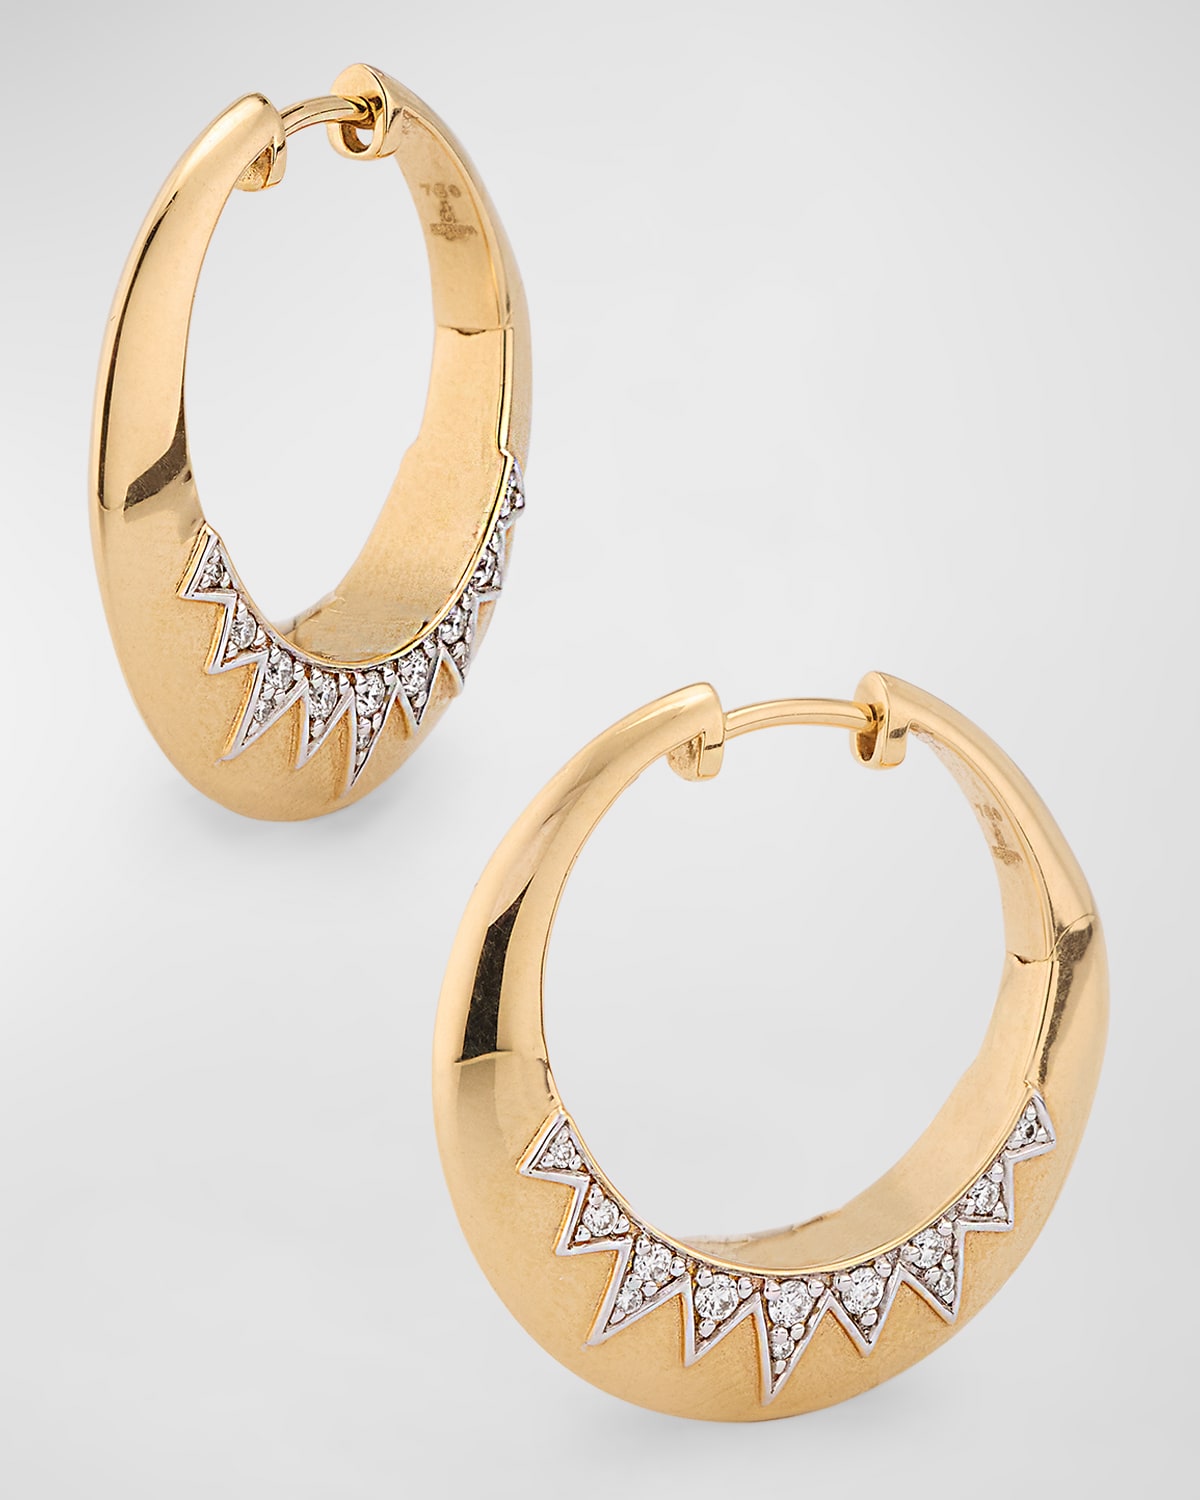 18K Yellow Gold Huggie Earrings with GH-SI Diamonds, 22mm